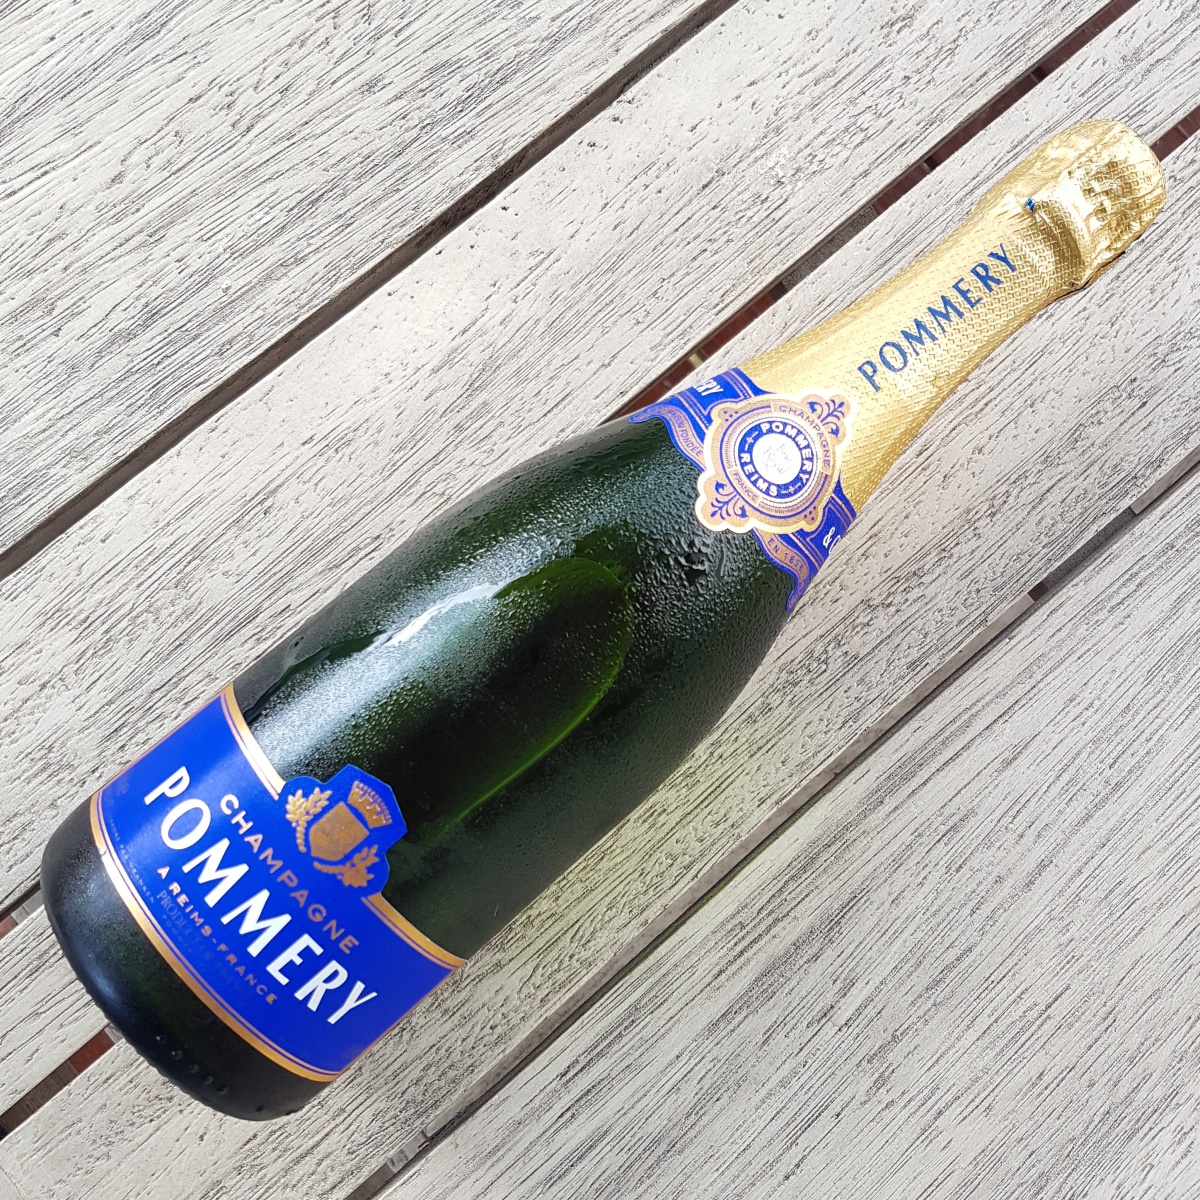 Review: Pommery Brut Royal NV Tips – Champagne